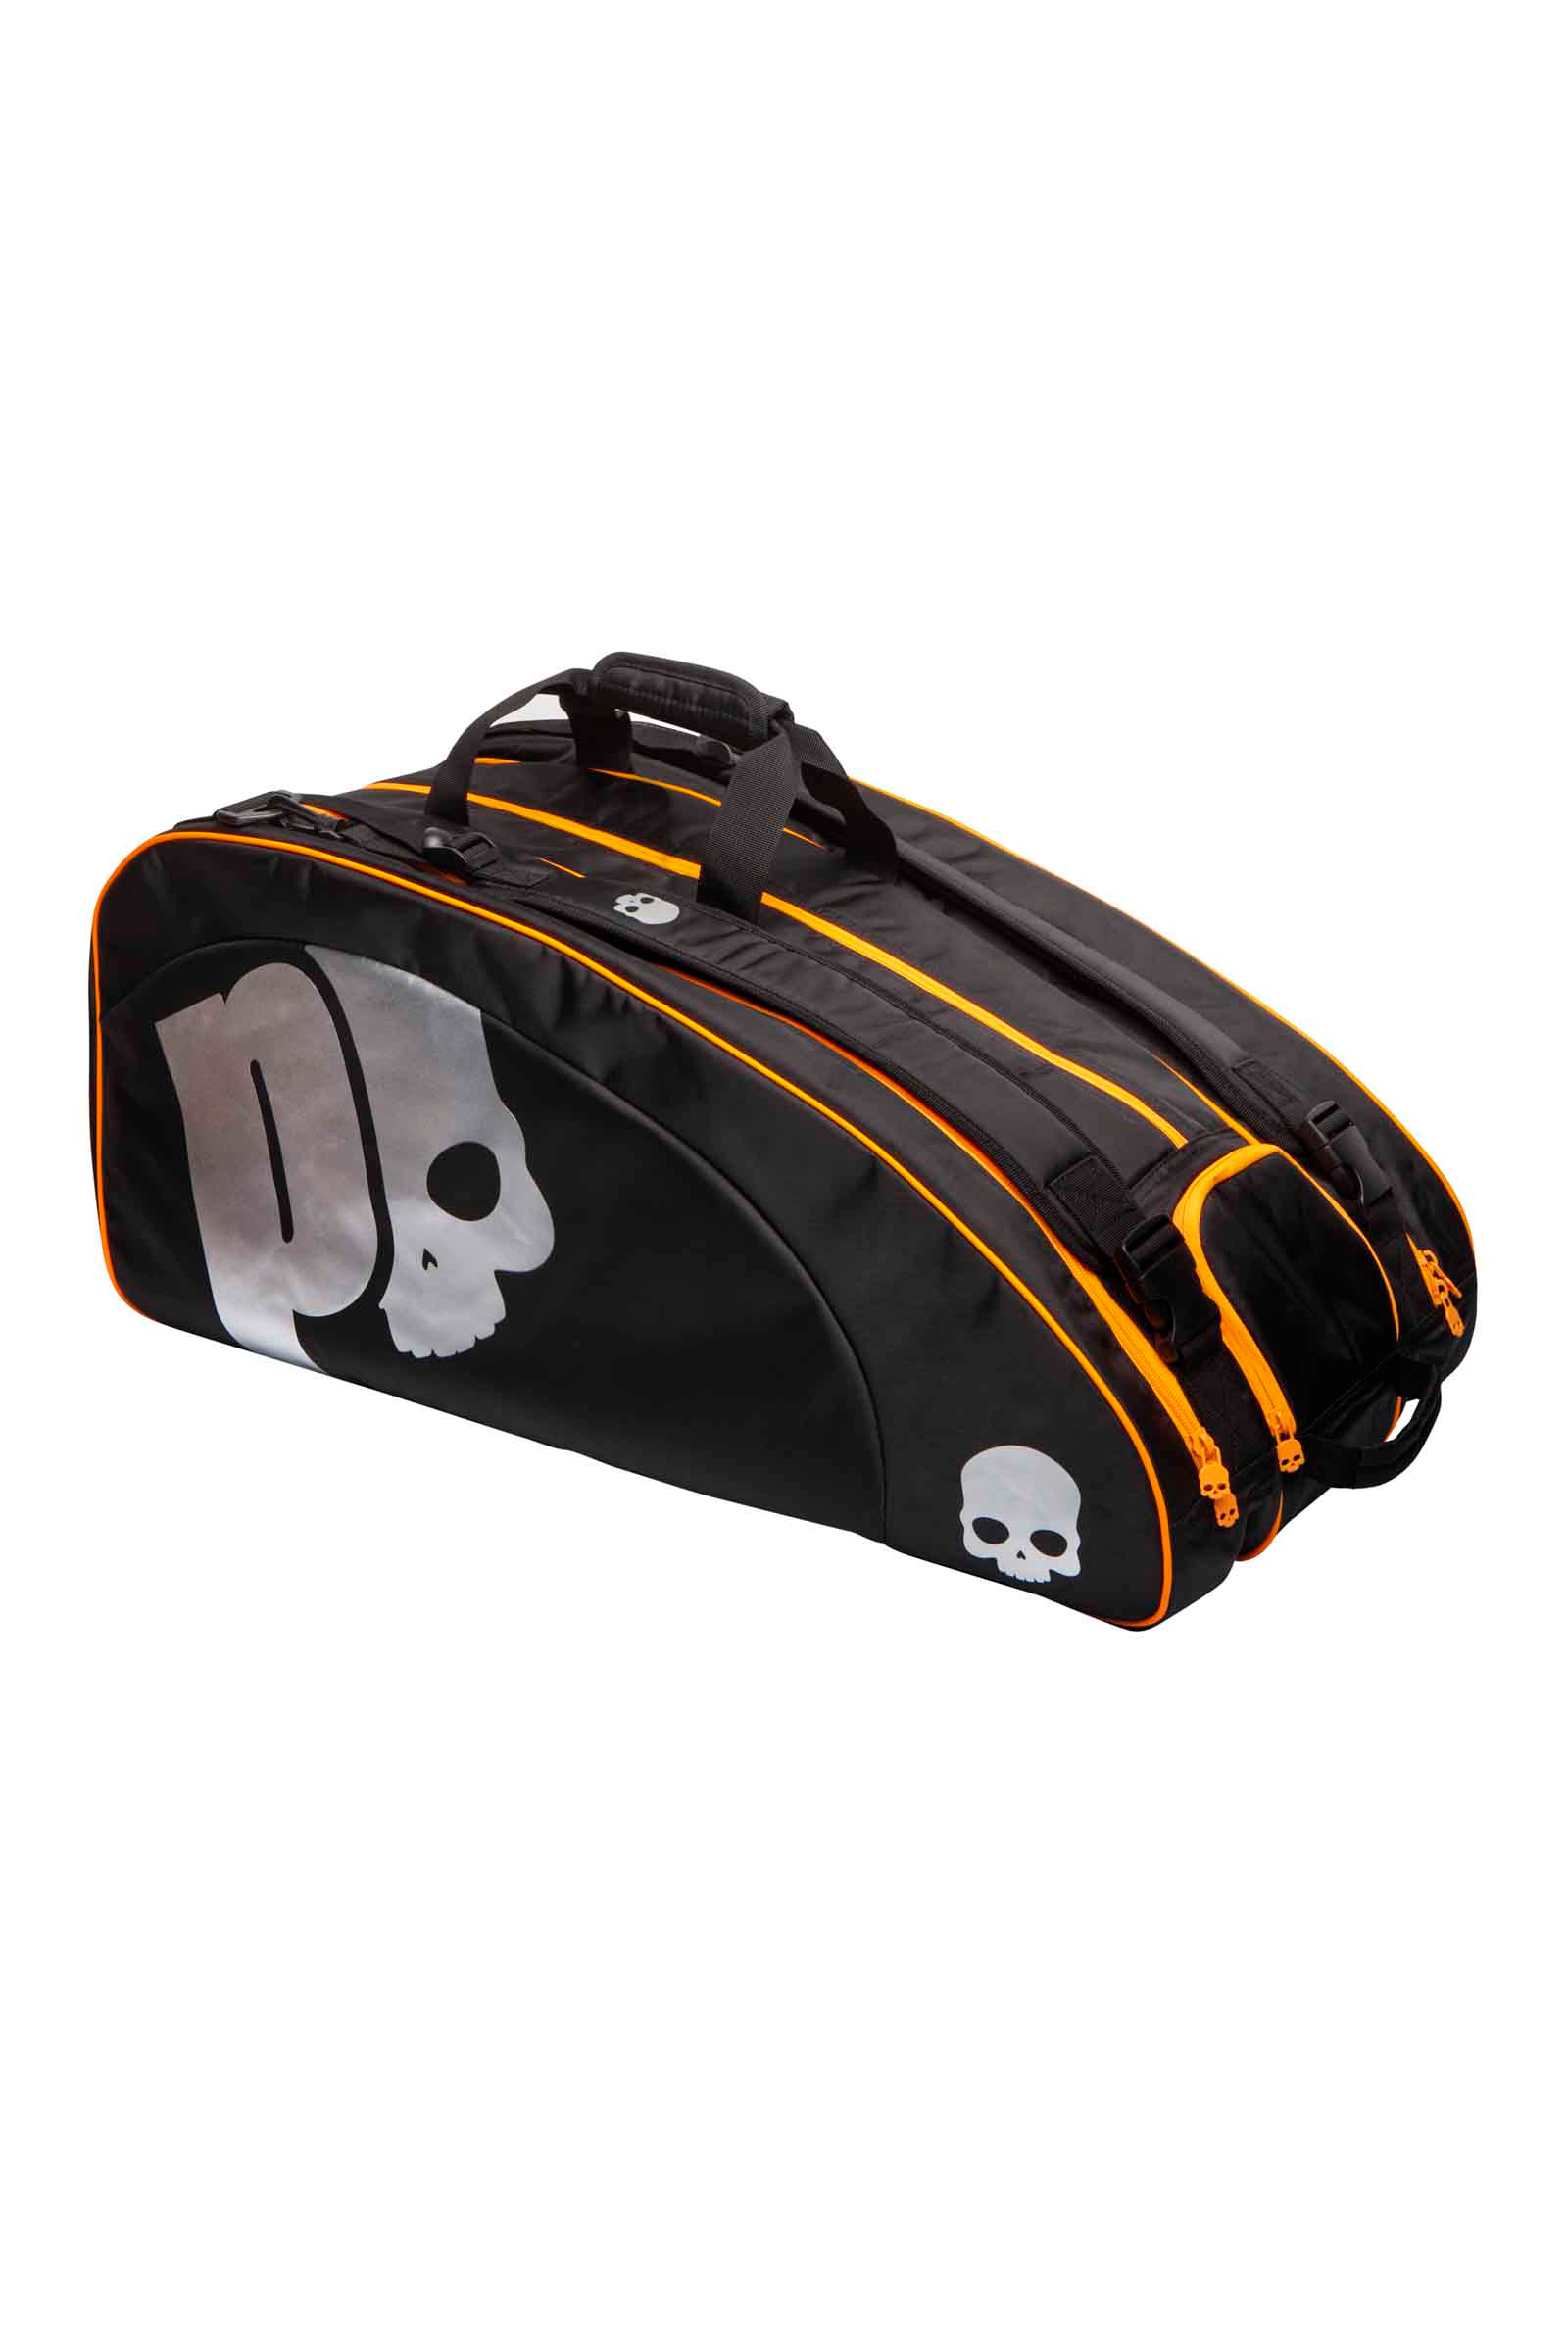 CHROME BAG PRINCE BY HYDROGEN - BLACK,ORANGE - Hydrogen - Luxury Sportwear